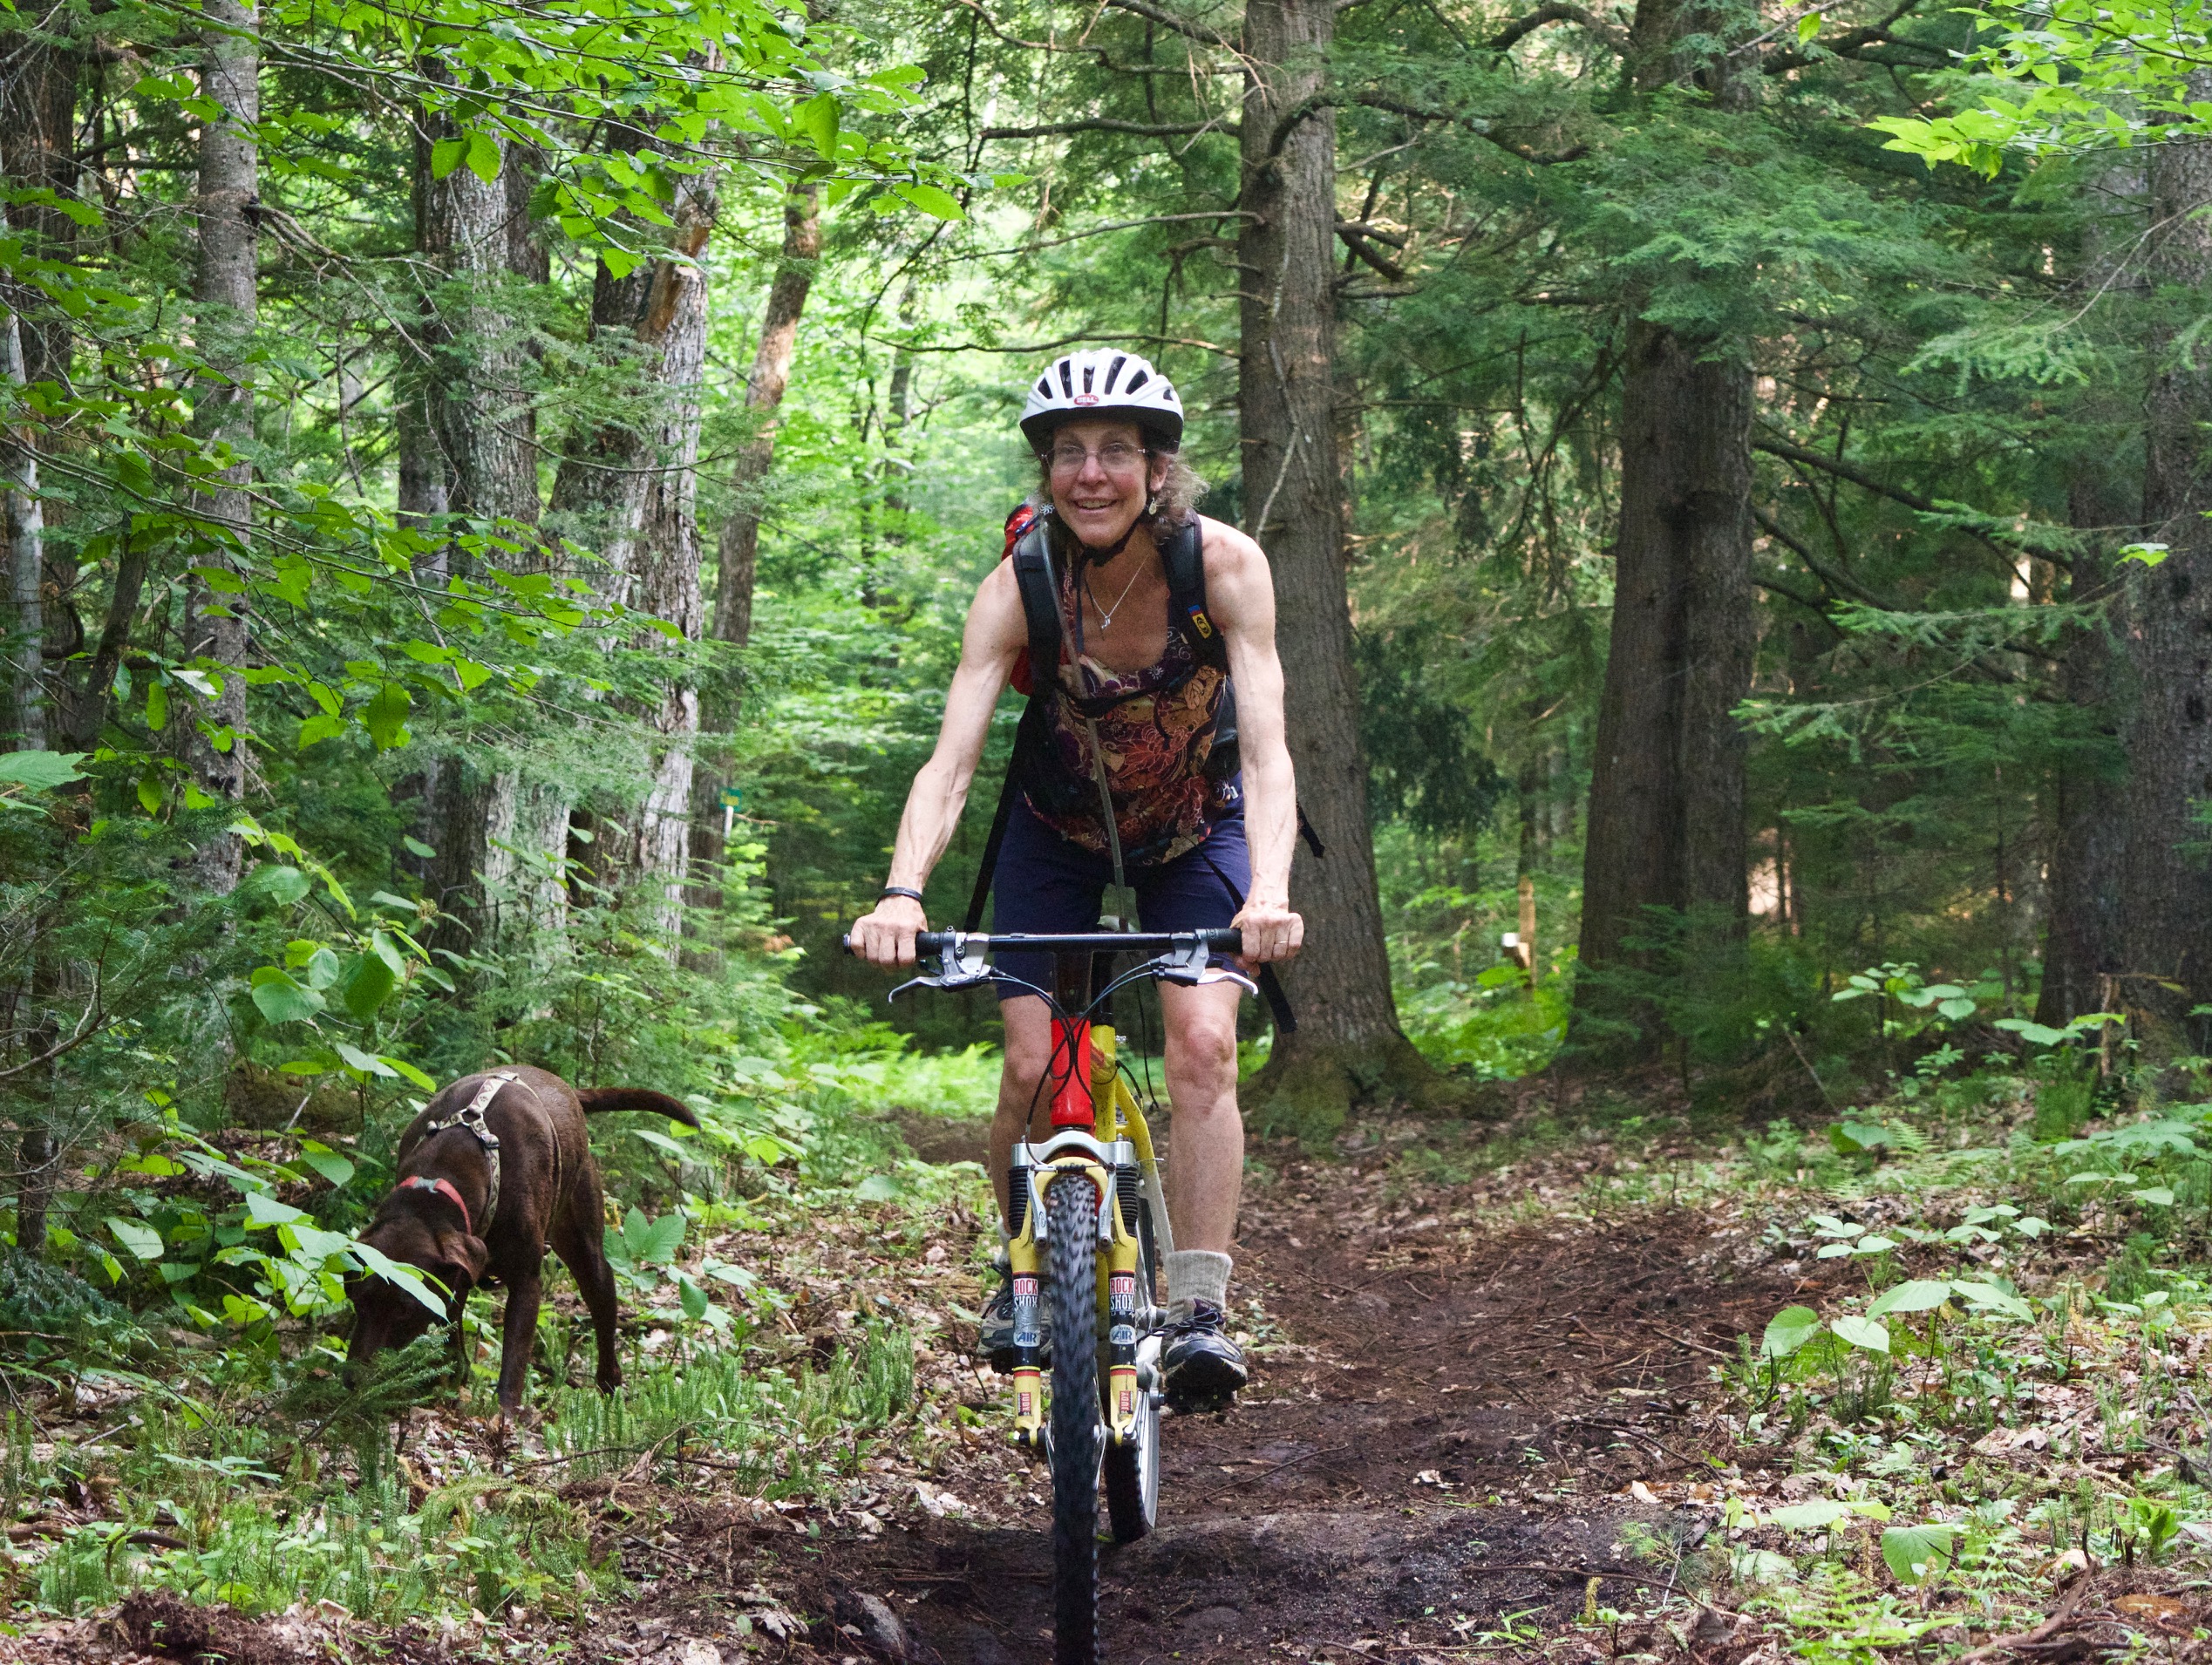 Biking with labrador at Bethel Inn Resort trails